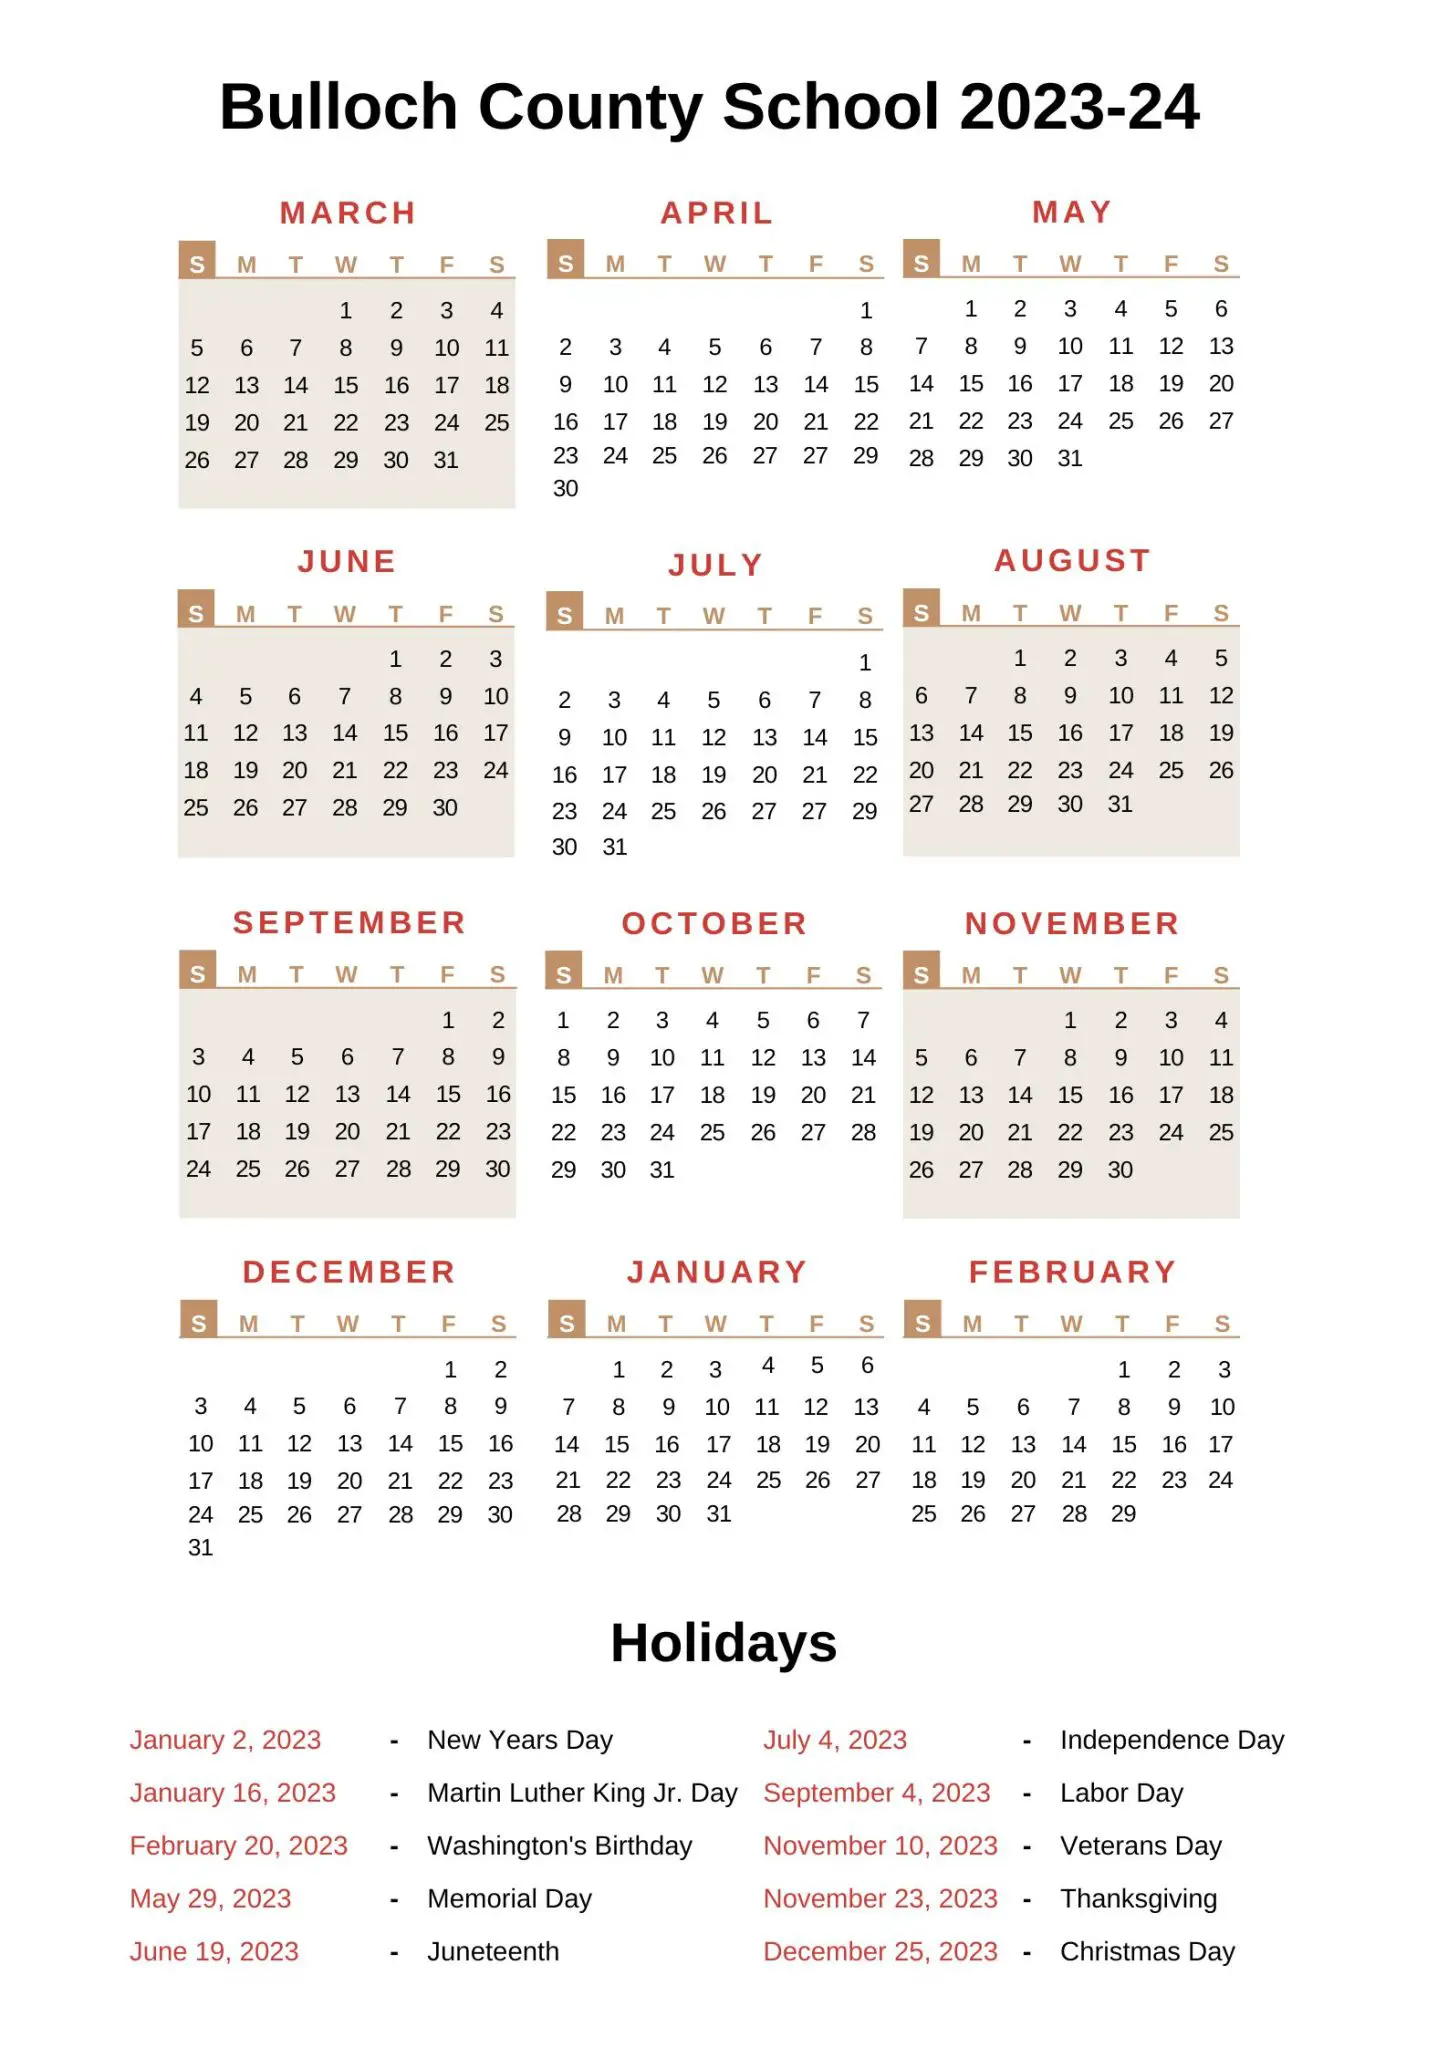 bulloch-county-schools-calendar-bcs-2023-24-with-holidays